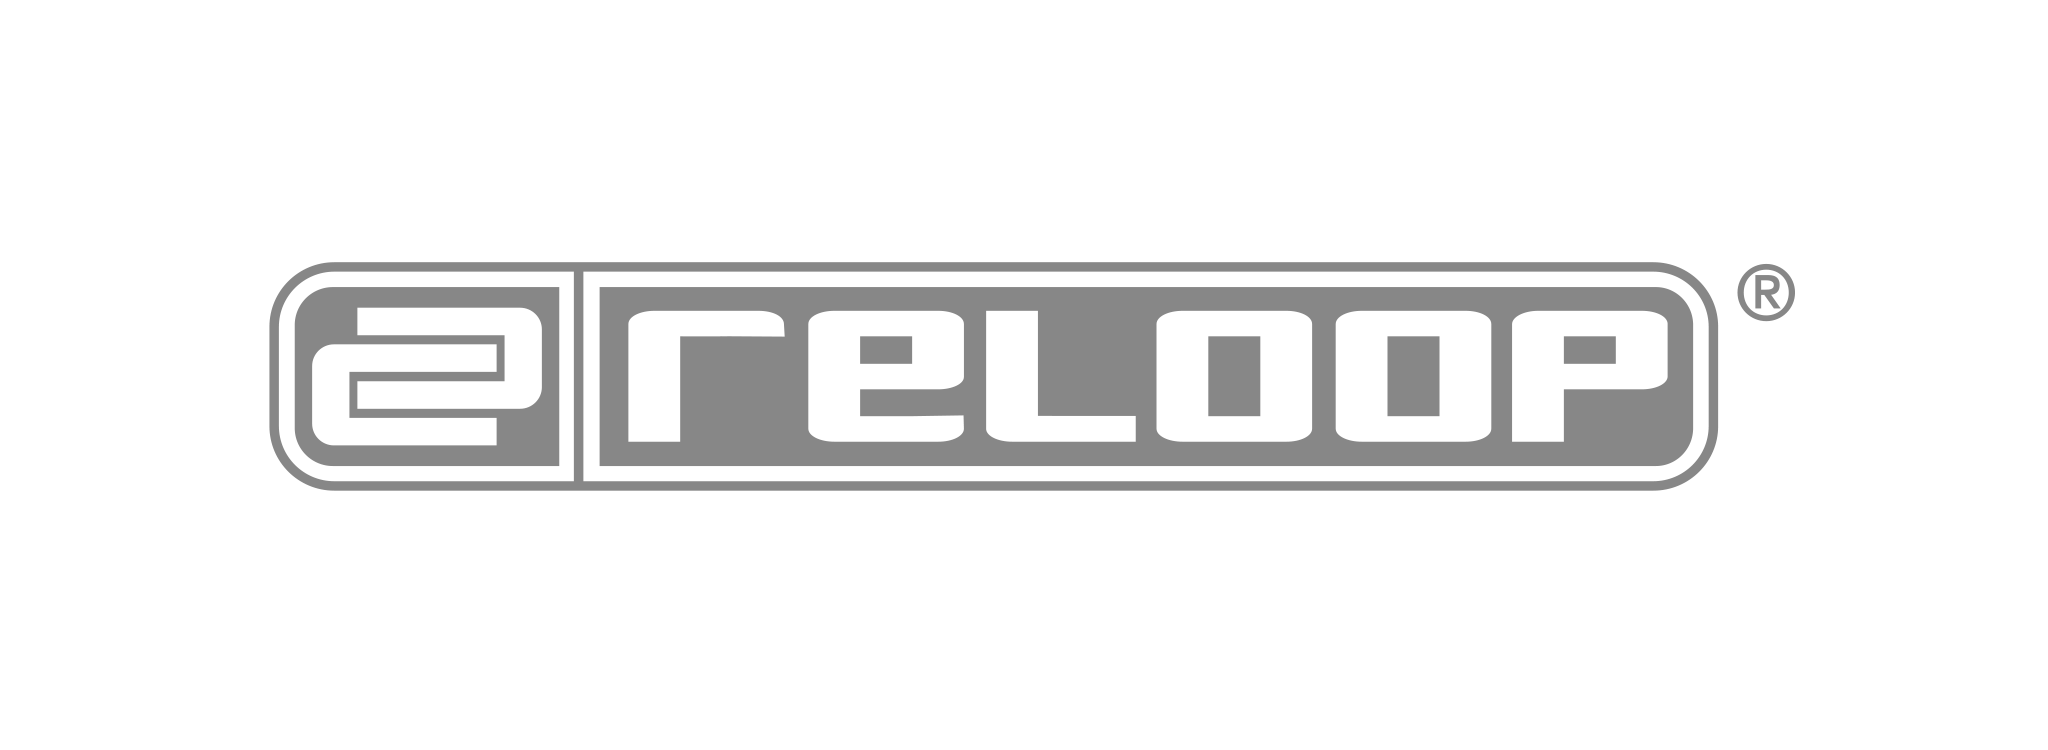 Reloop Logo